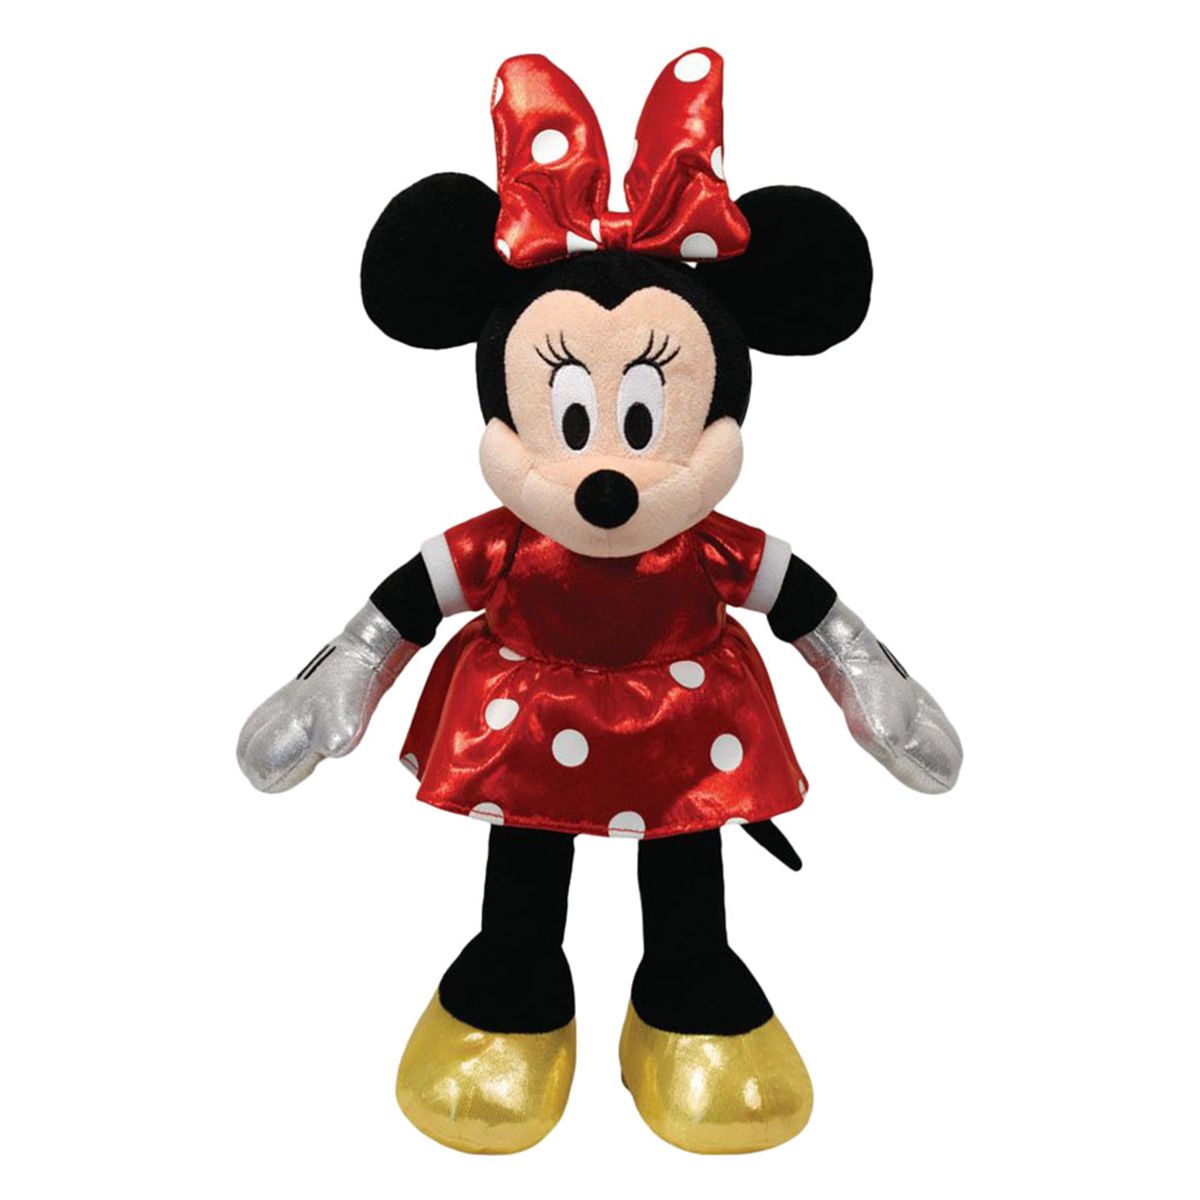 Игрушка минни. Minnie Mouse Disney игрушка. Минни Маус игрушка мягкая Disney. Микки Маус мягкая игрушка 90см мини Маус красный. Микки Маус мягкая игрушка 60см.